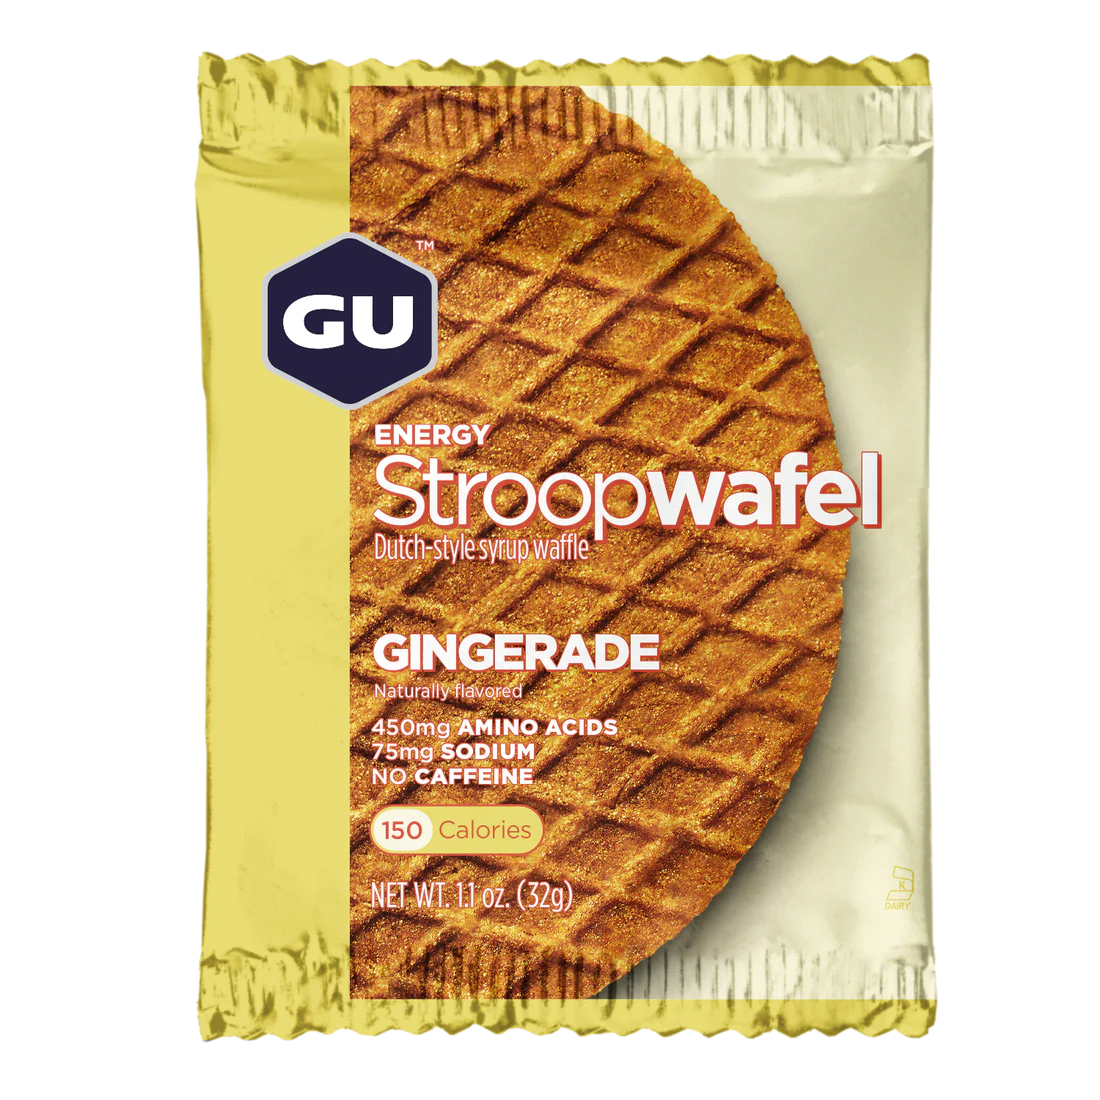 GU Stroopwafel - Gingerade (4pk)